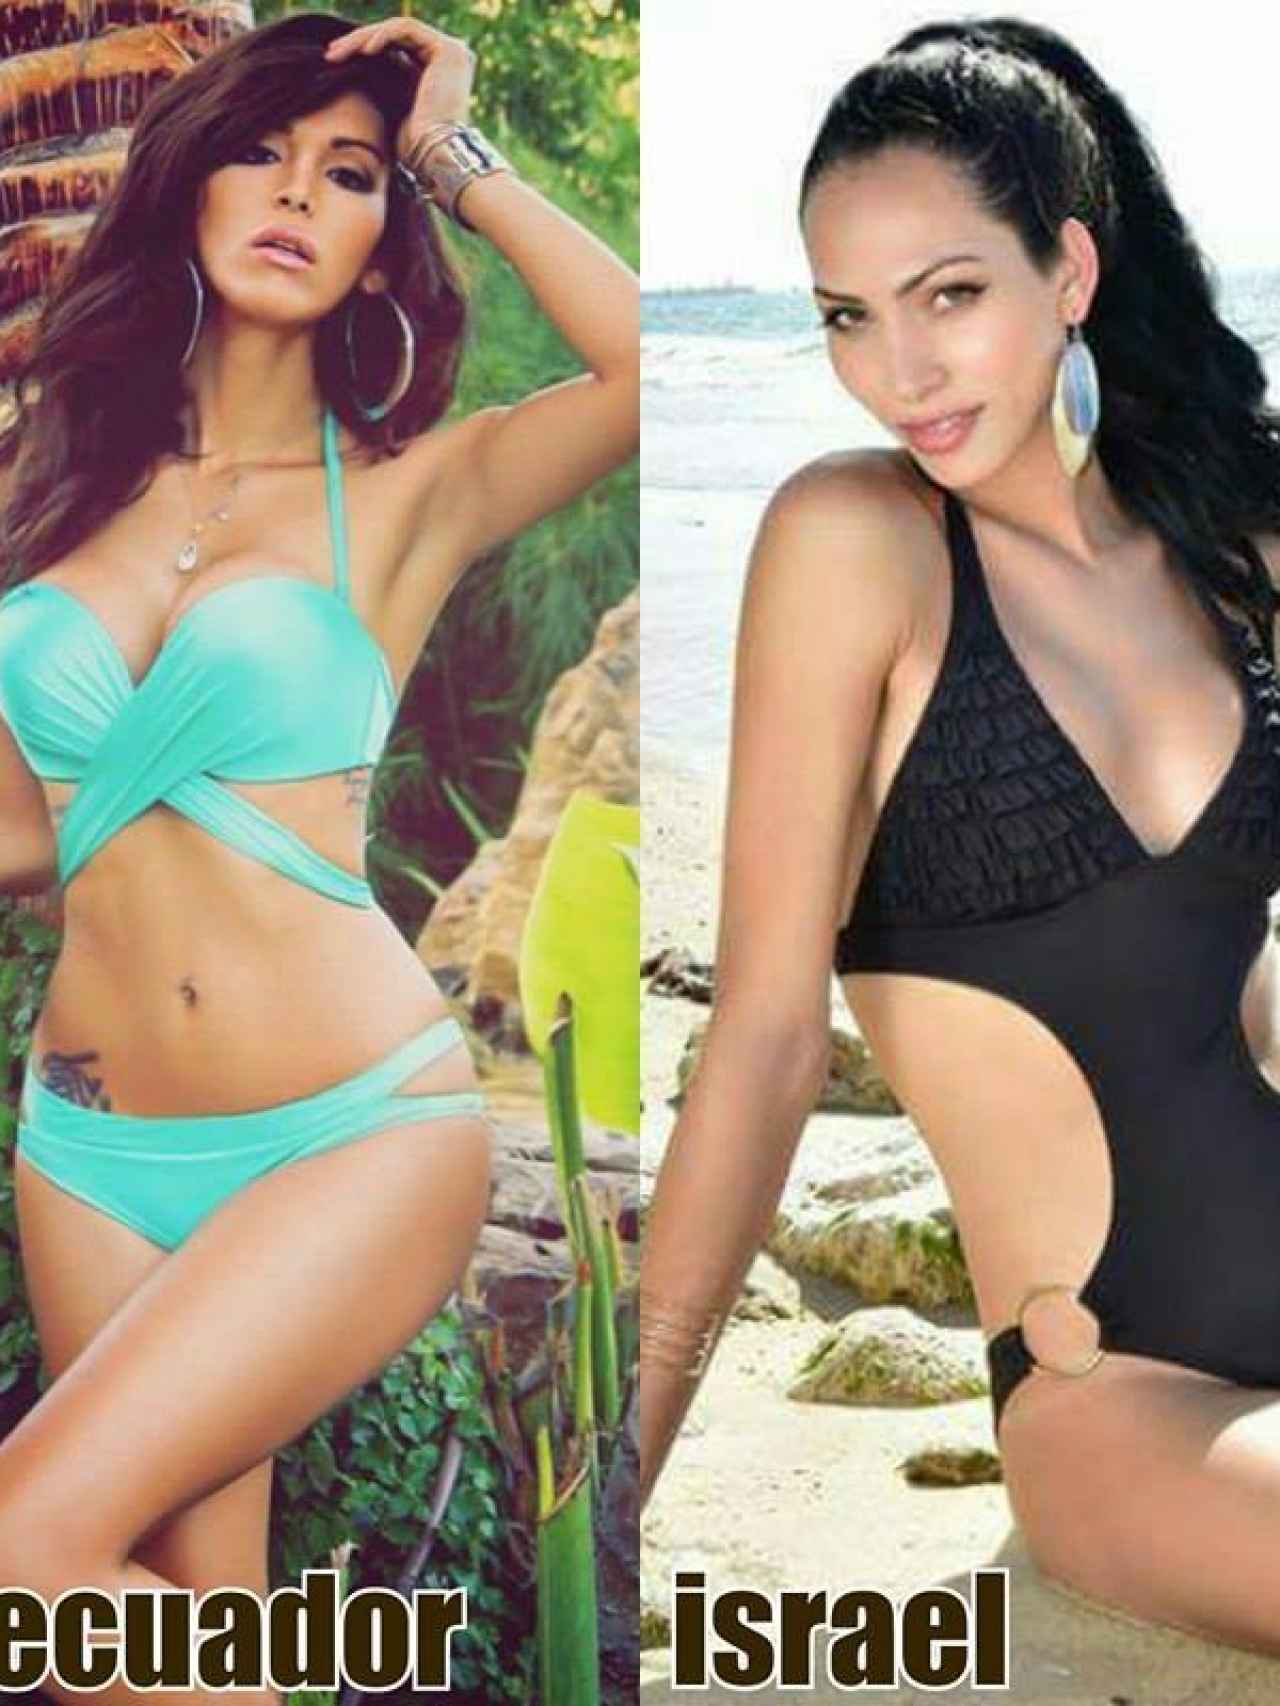 Miss Ecuador - Miss Israel